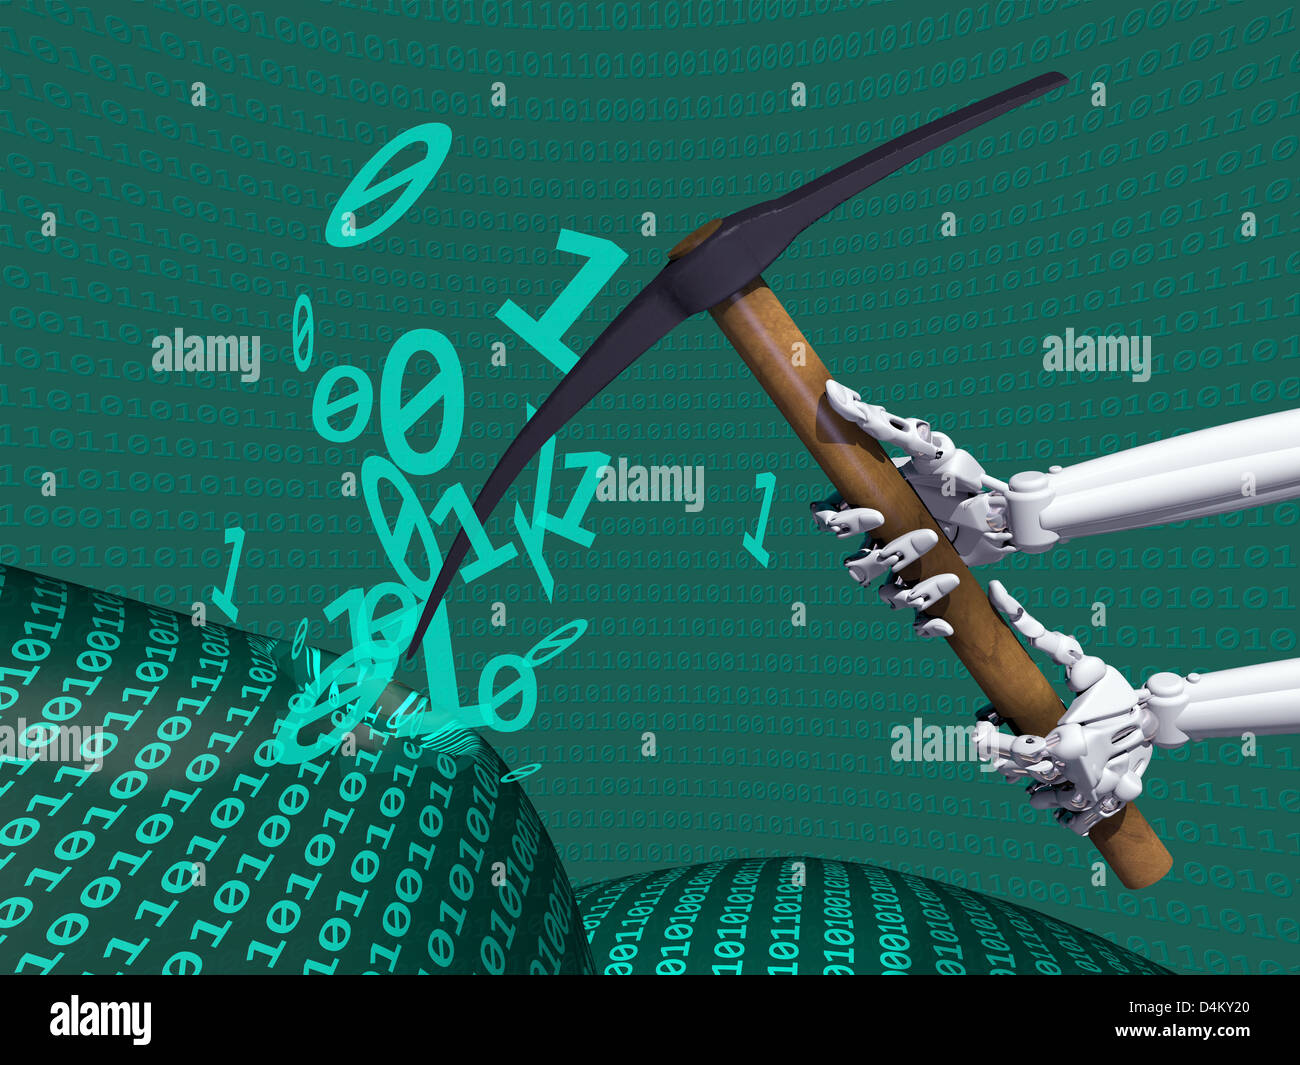 Illustration depicting data mining of computer information Stock Photo